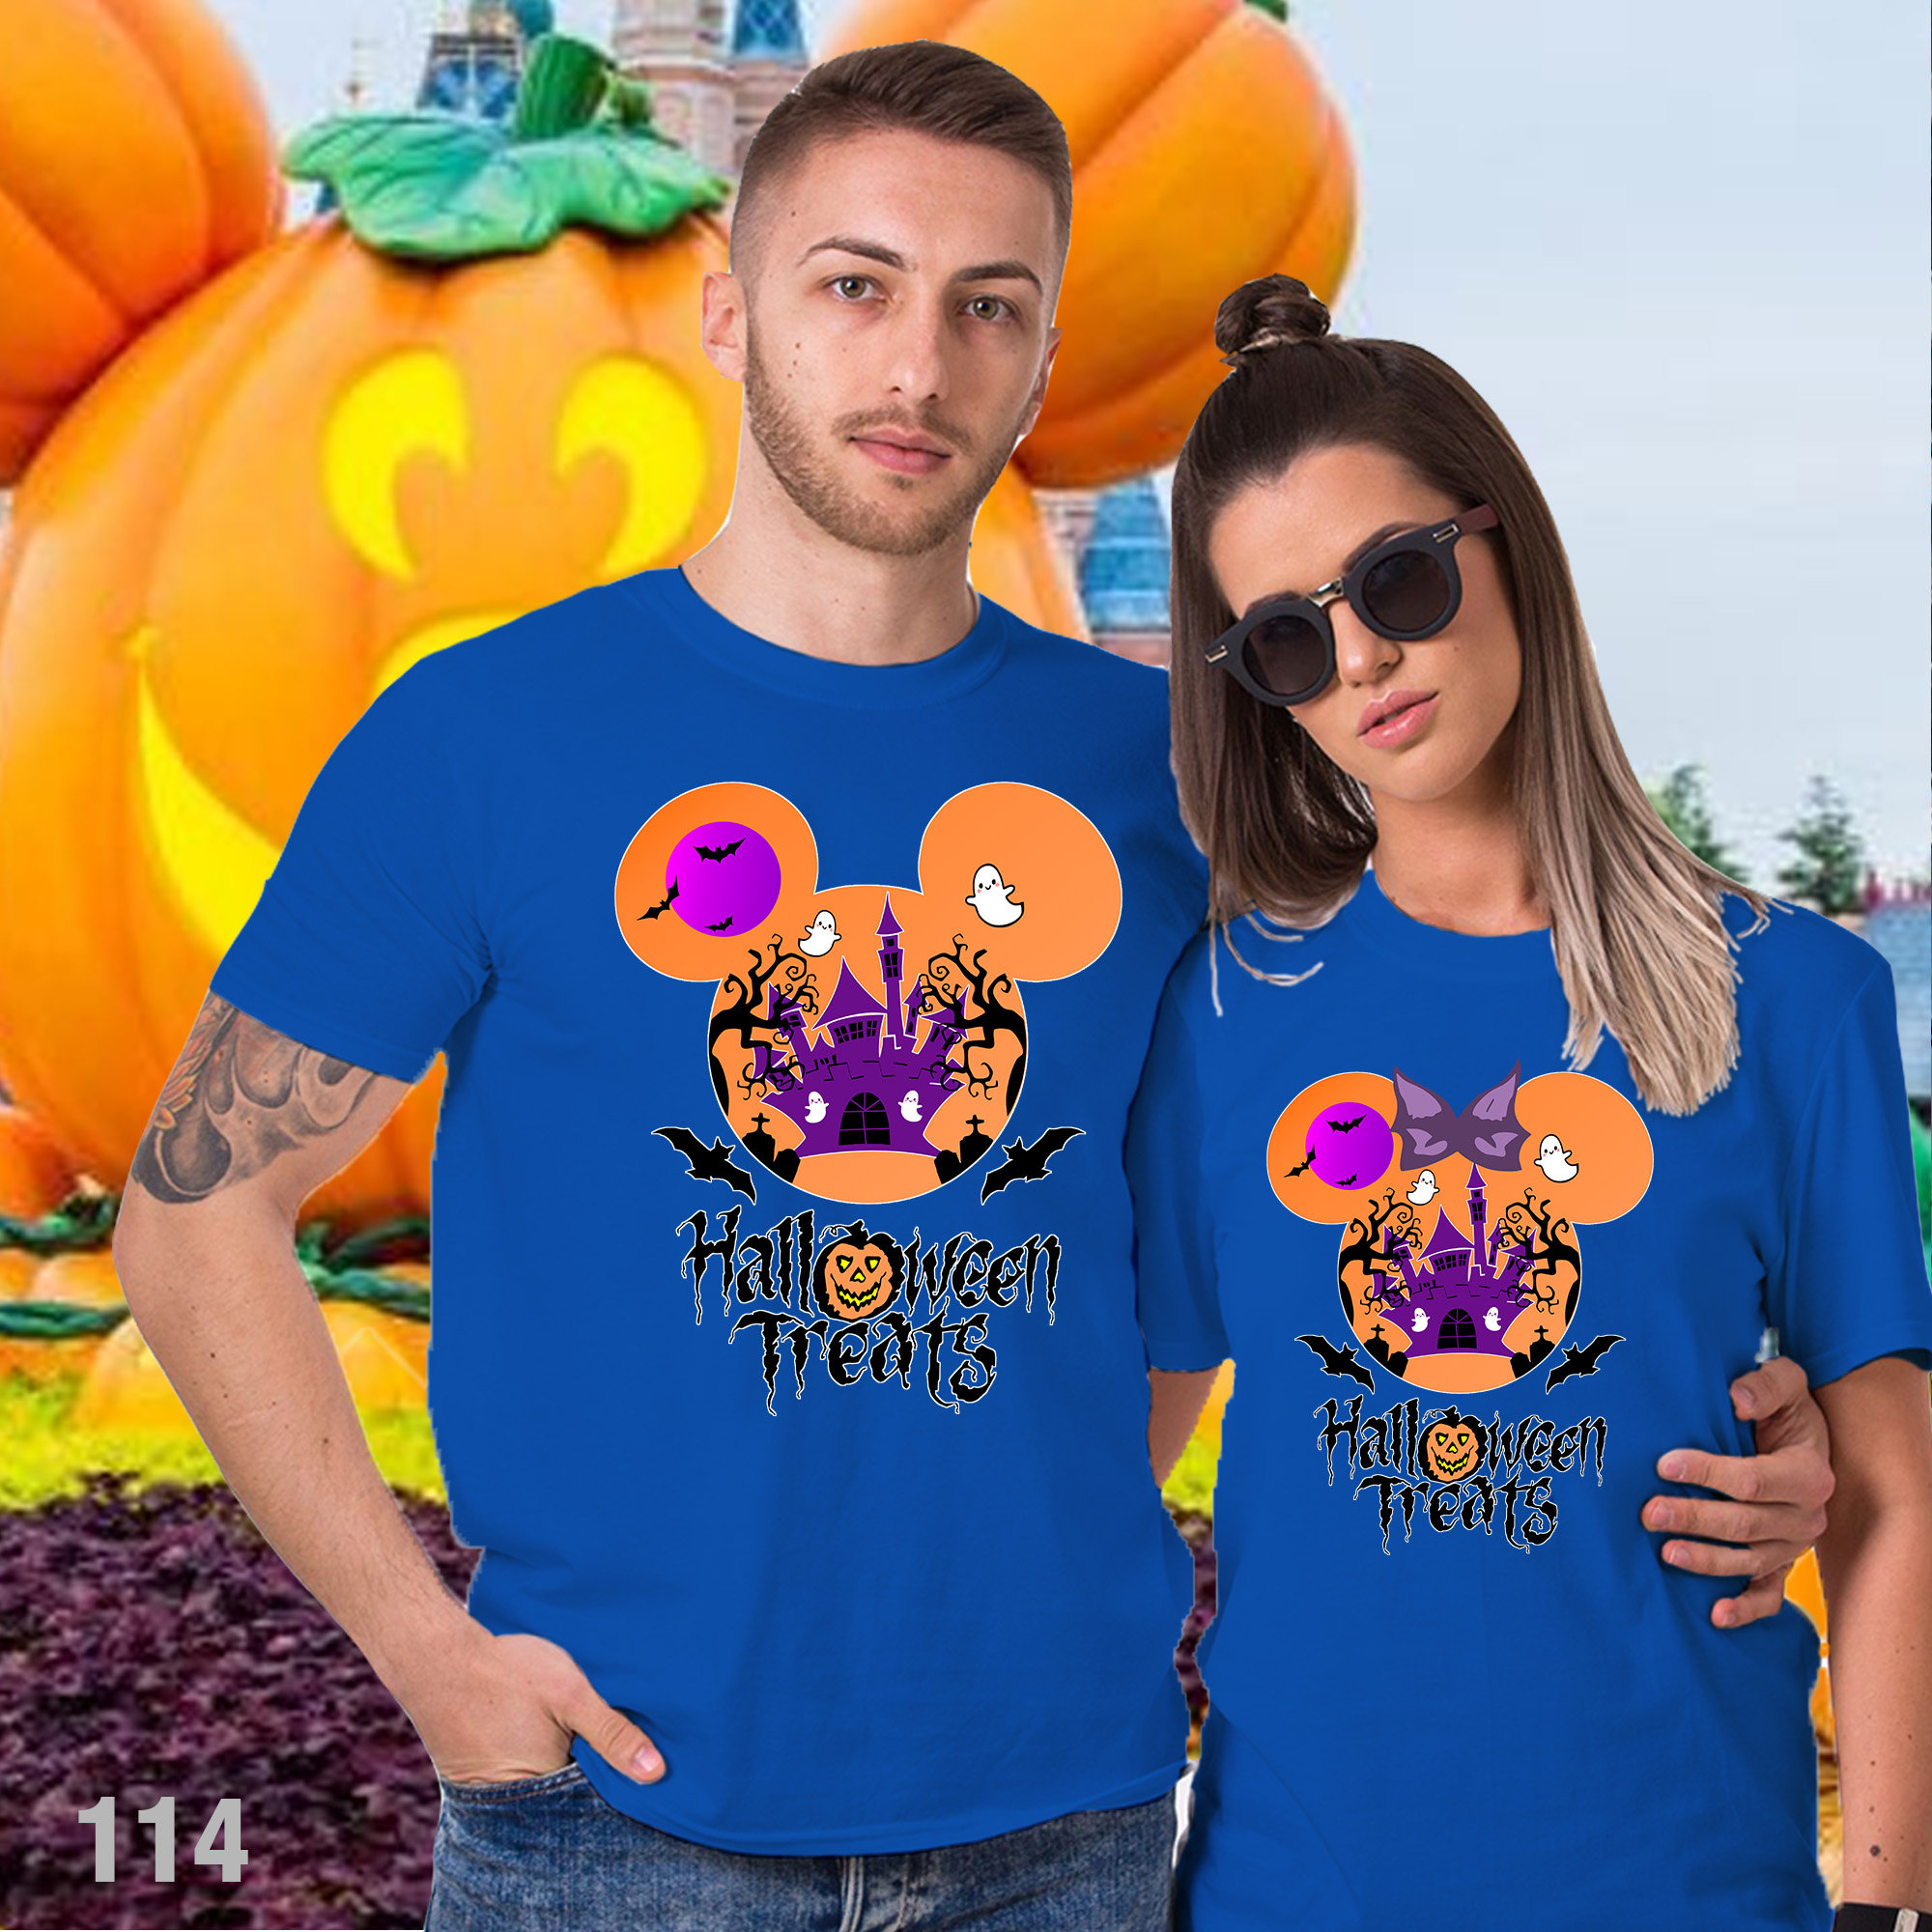 Disney Castle Halloween Shirts, Disney Halloween Treats matching shirts ...